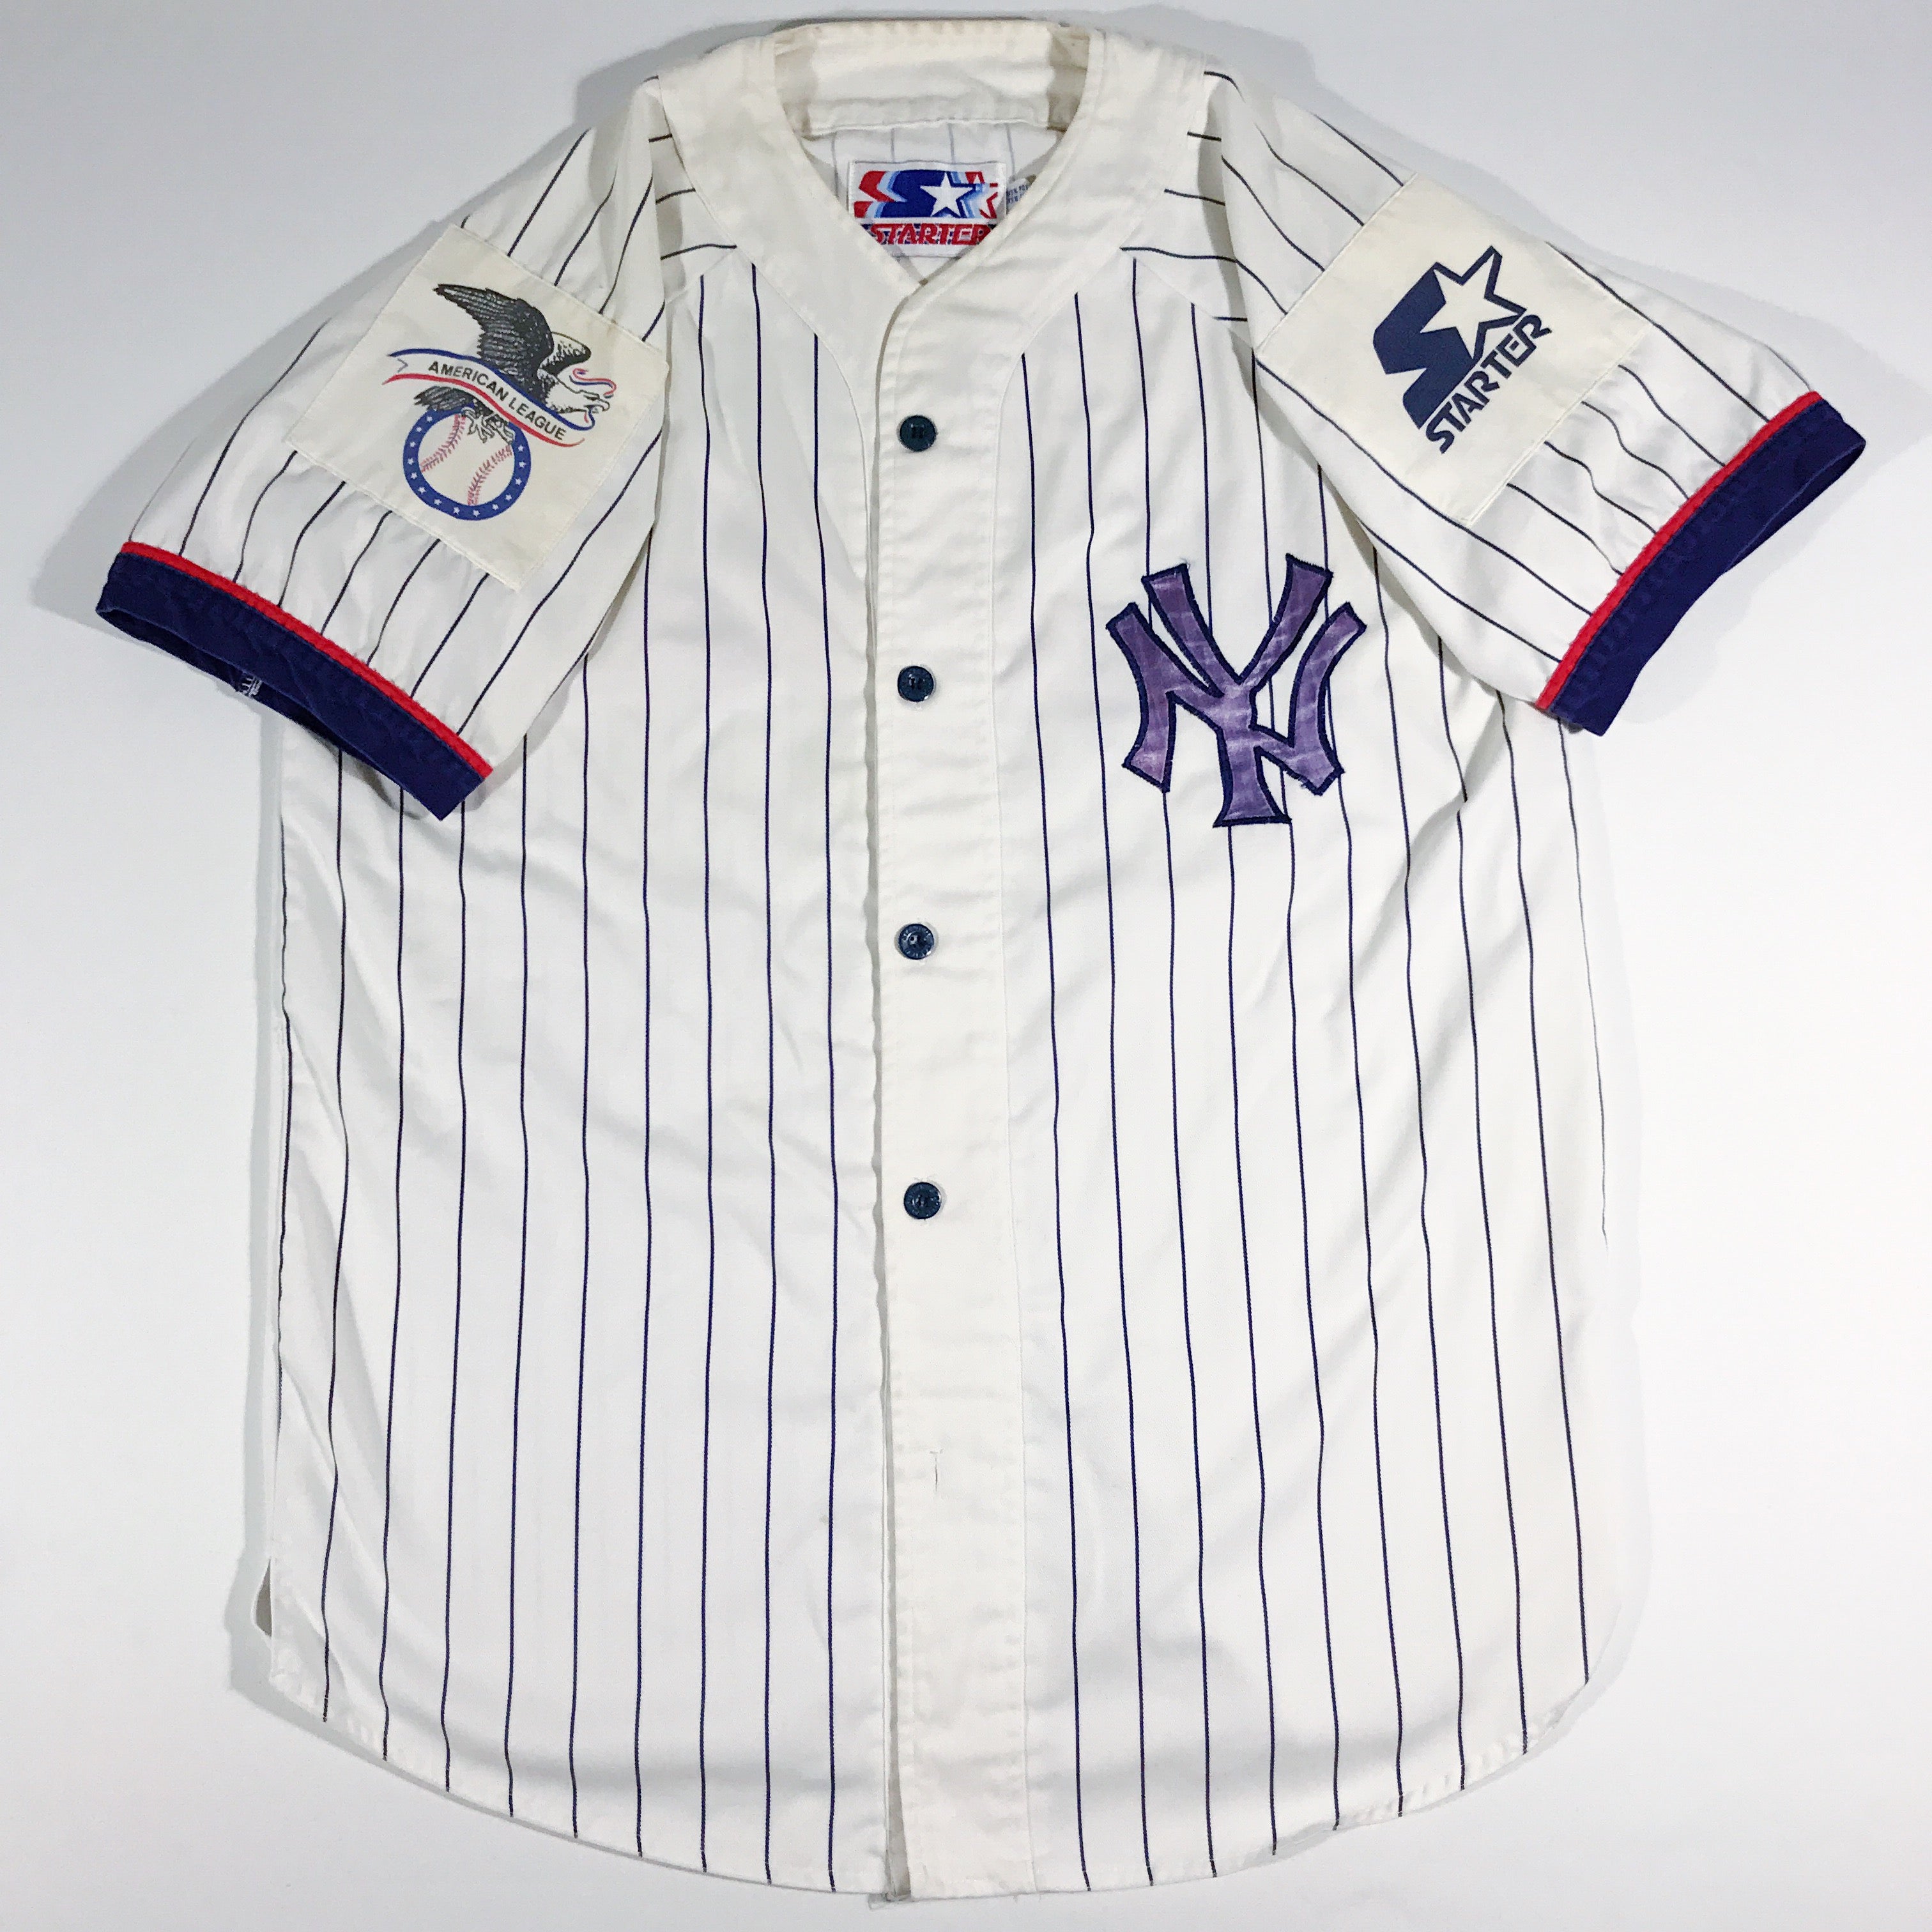 STARTER, Shirts, Yankees Starter Jersey